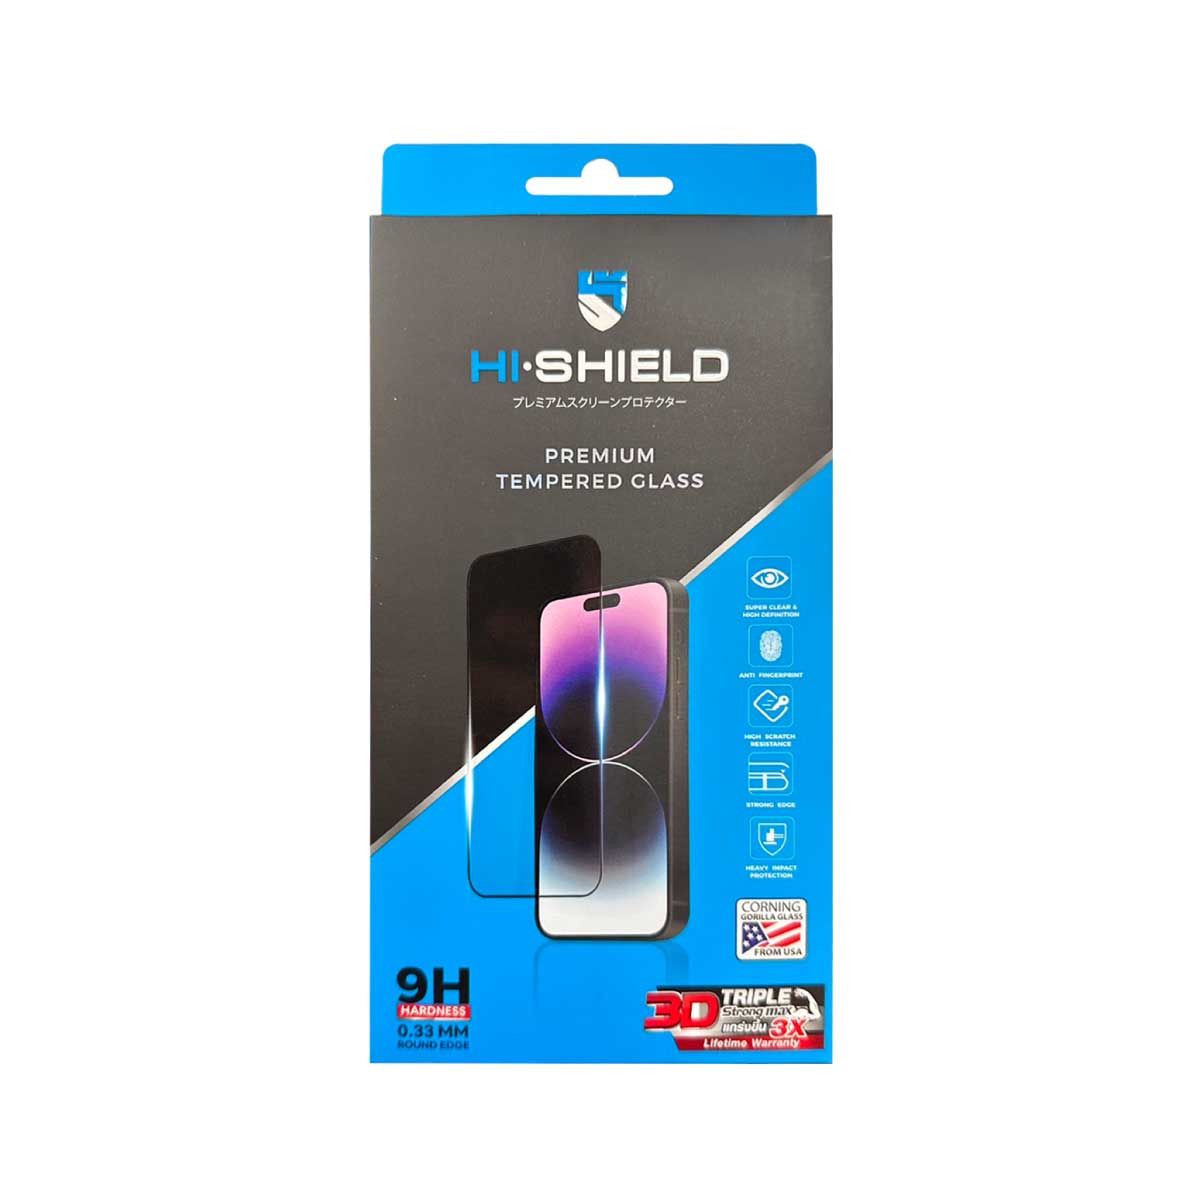 HI-SHIELD Boxset1 iPhone15 Plus ( 3DTS + LENS1 + Crystal case + กระเป๋า)